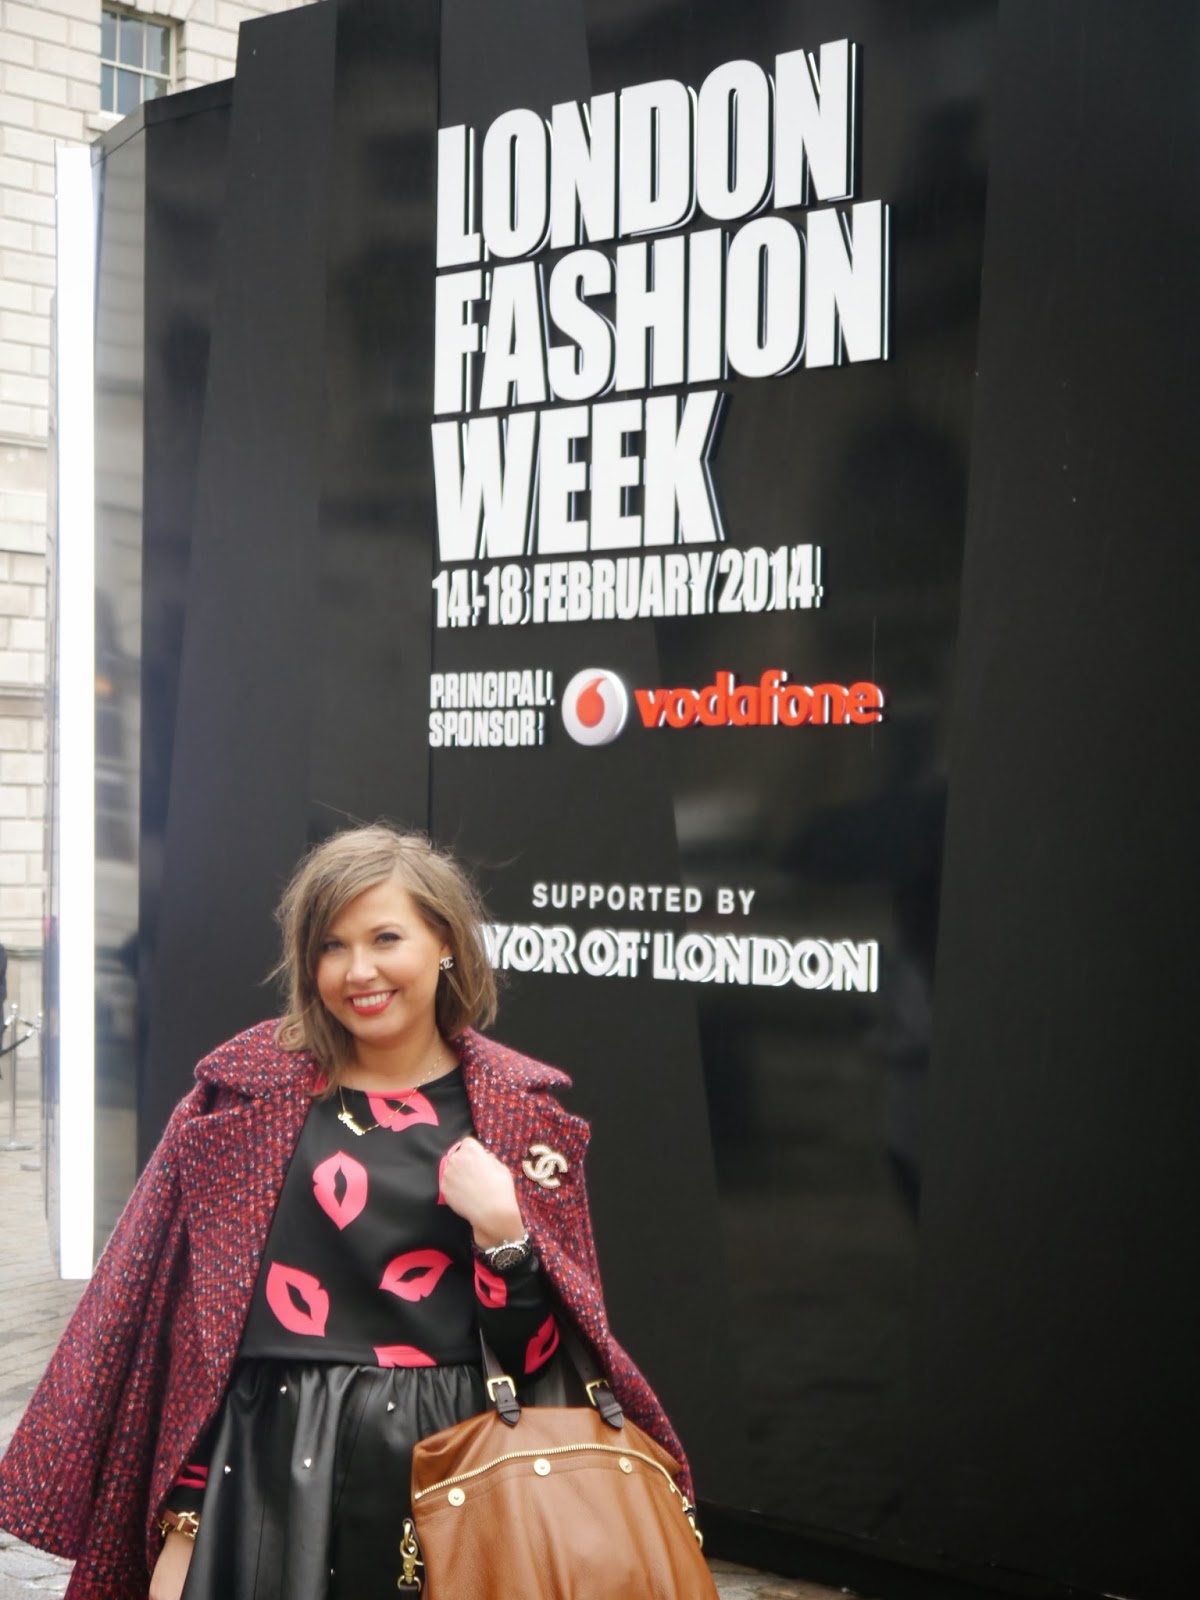 London Fashion Week ! Collection from Bora Aksu and Daks AW/14